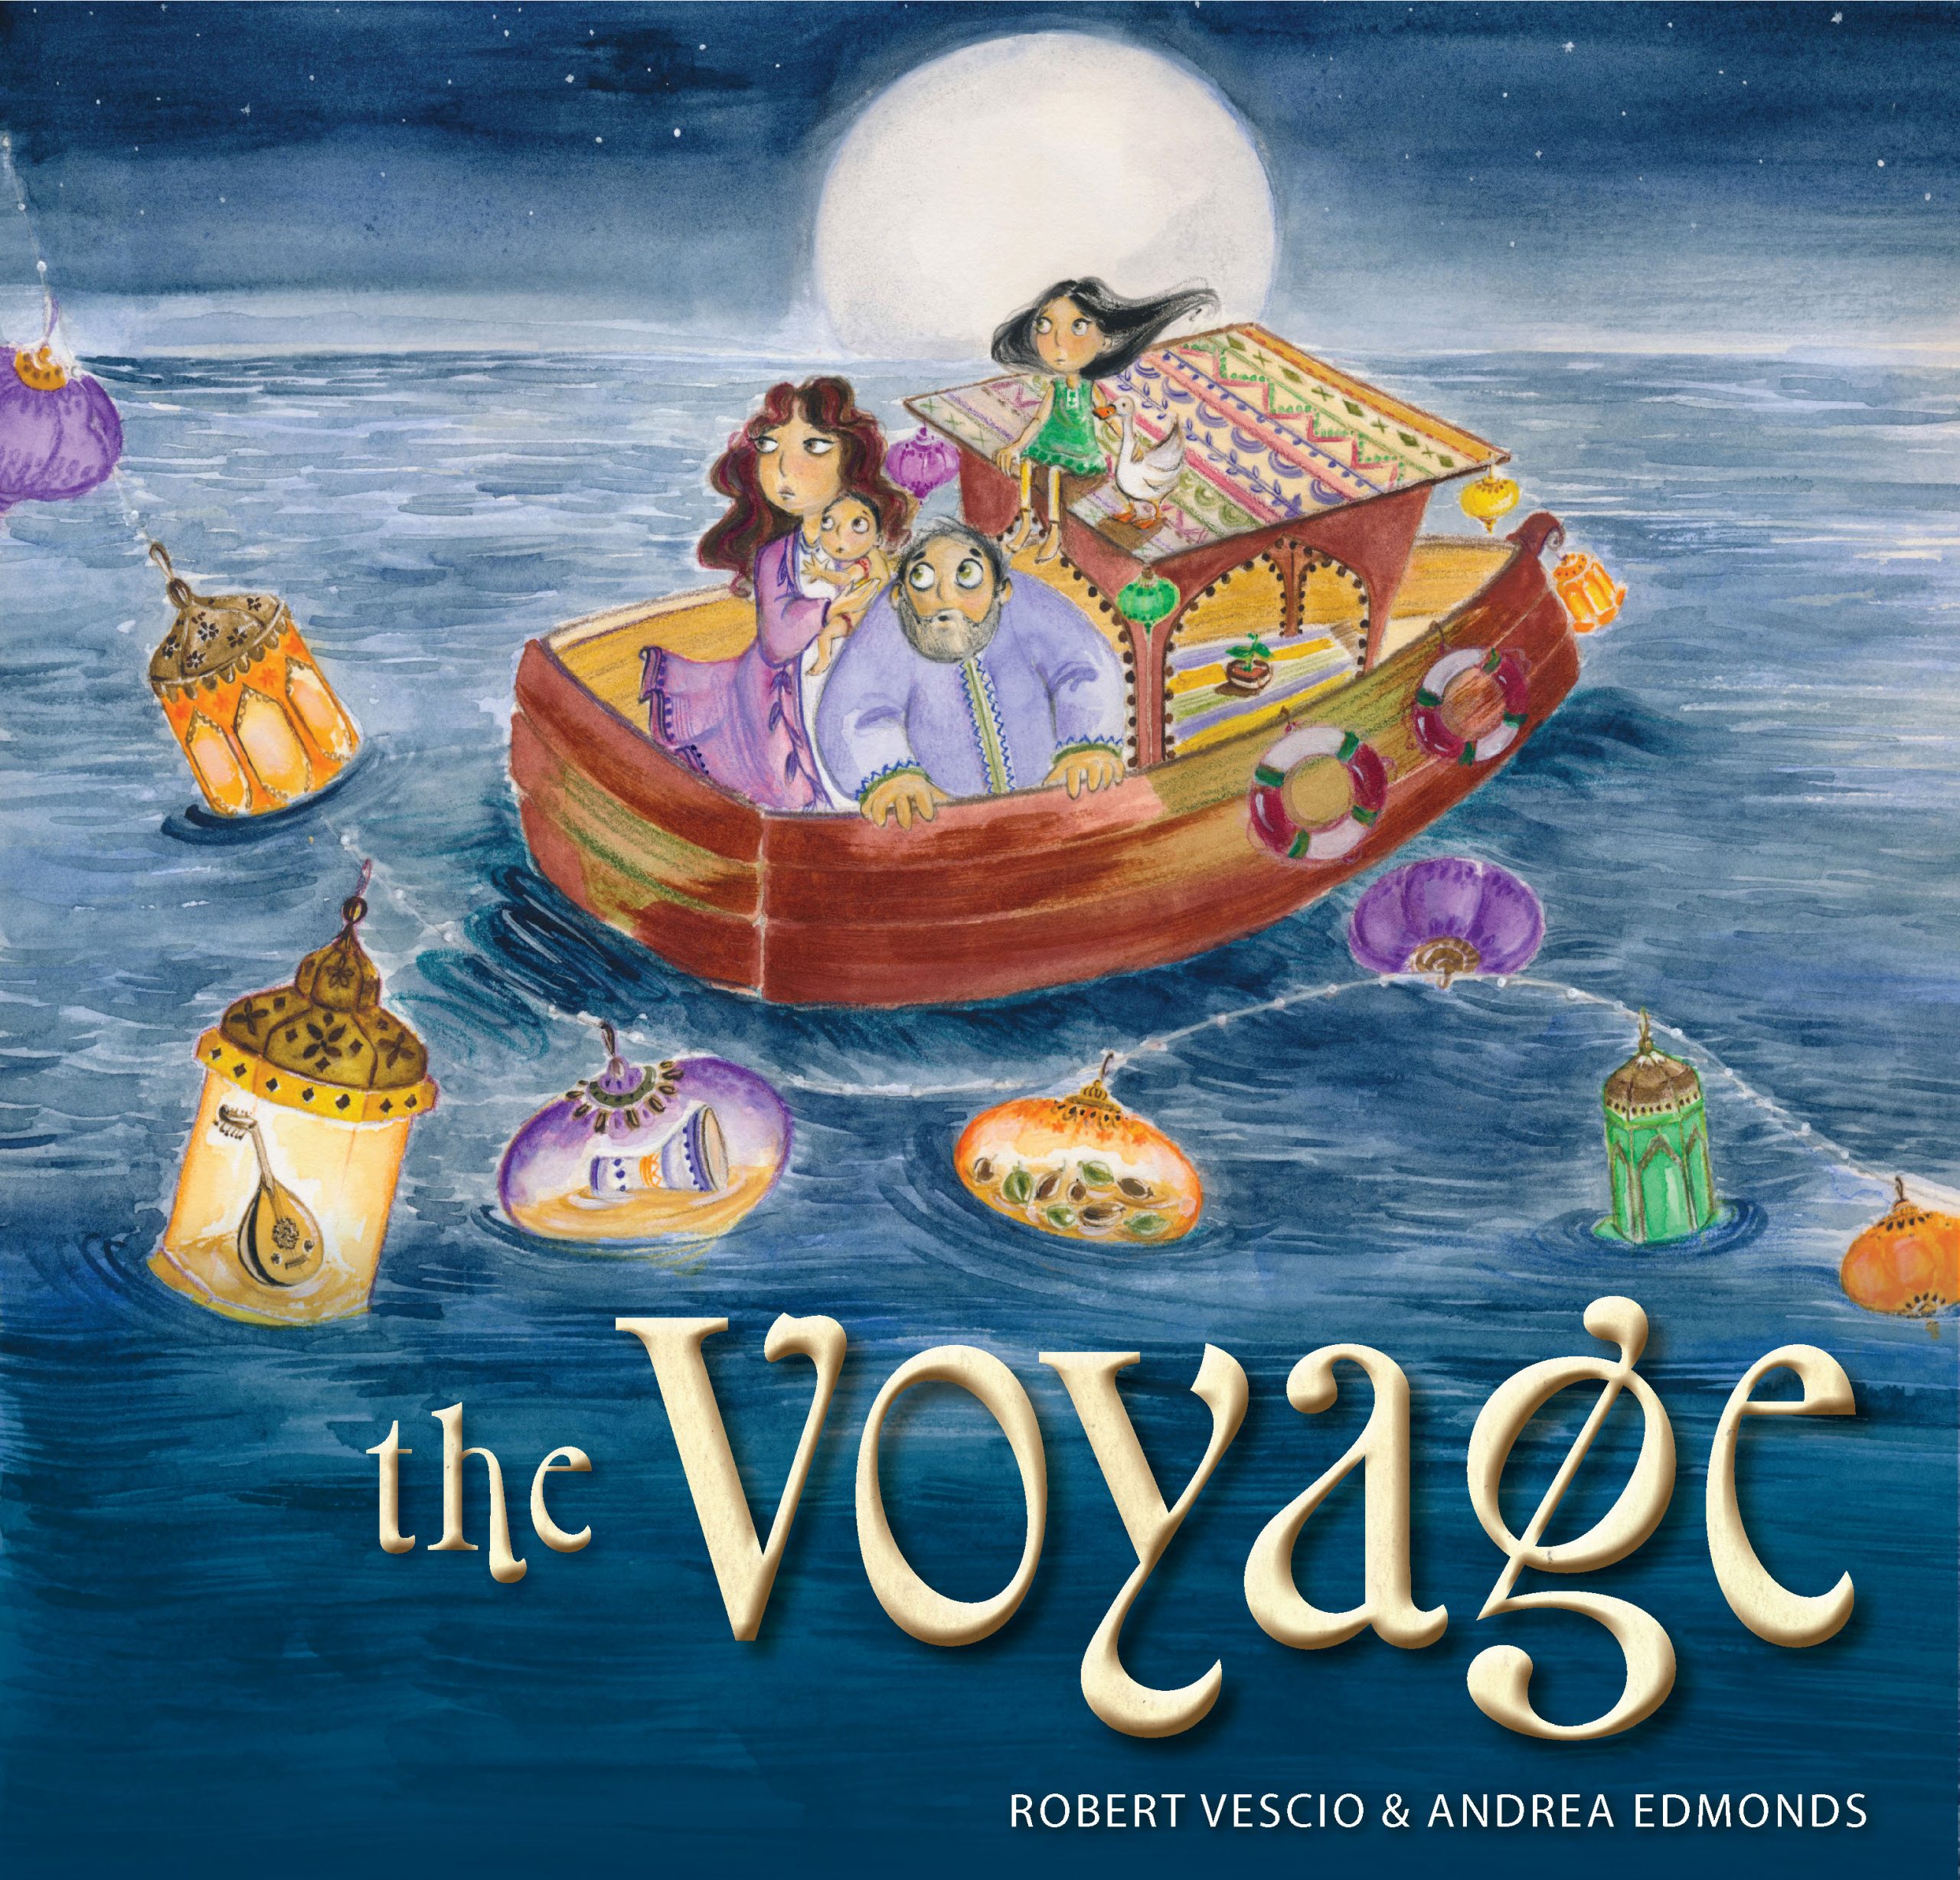 the voyage ne demek